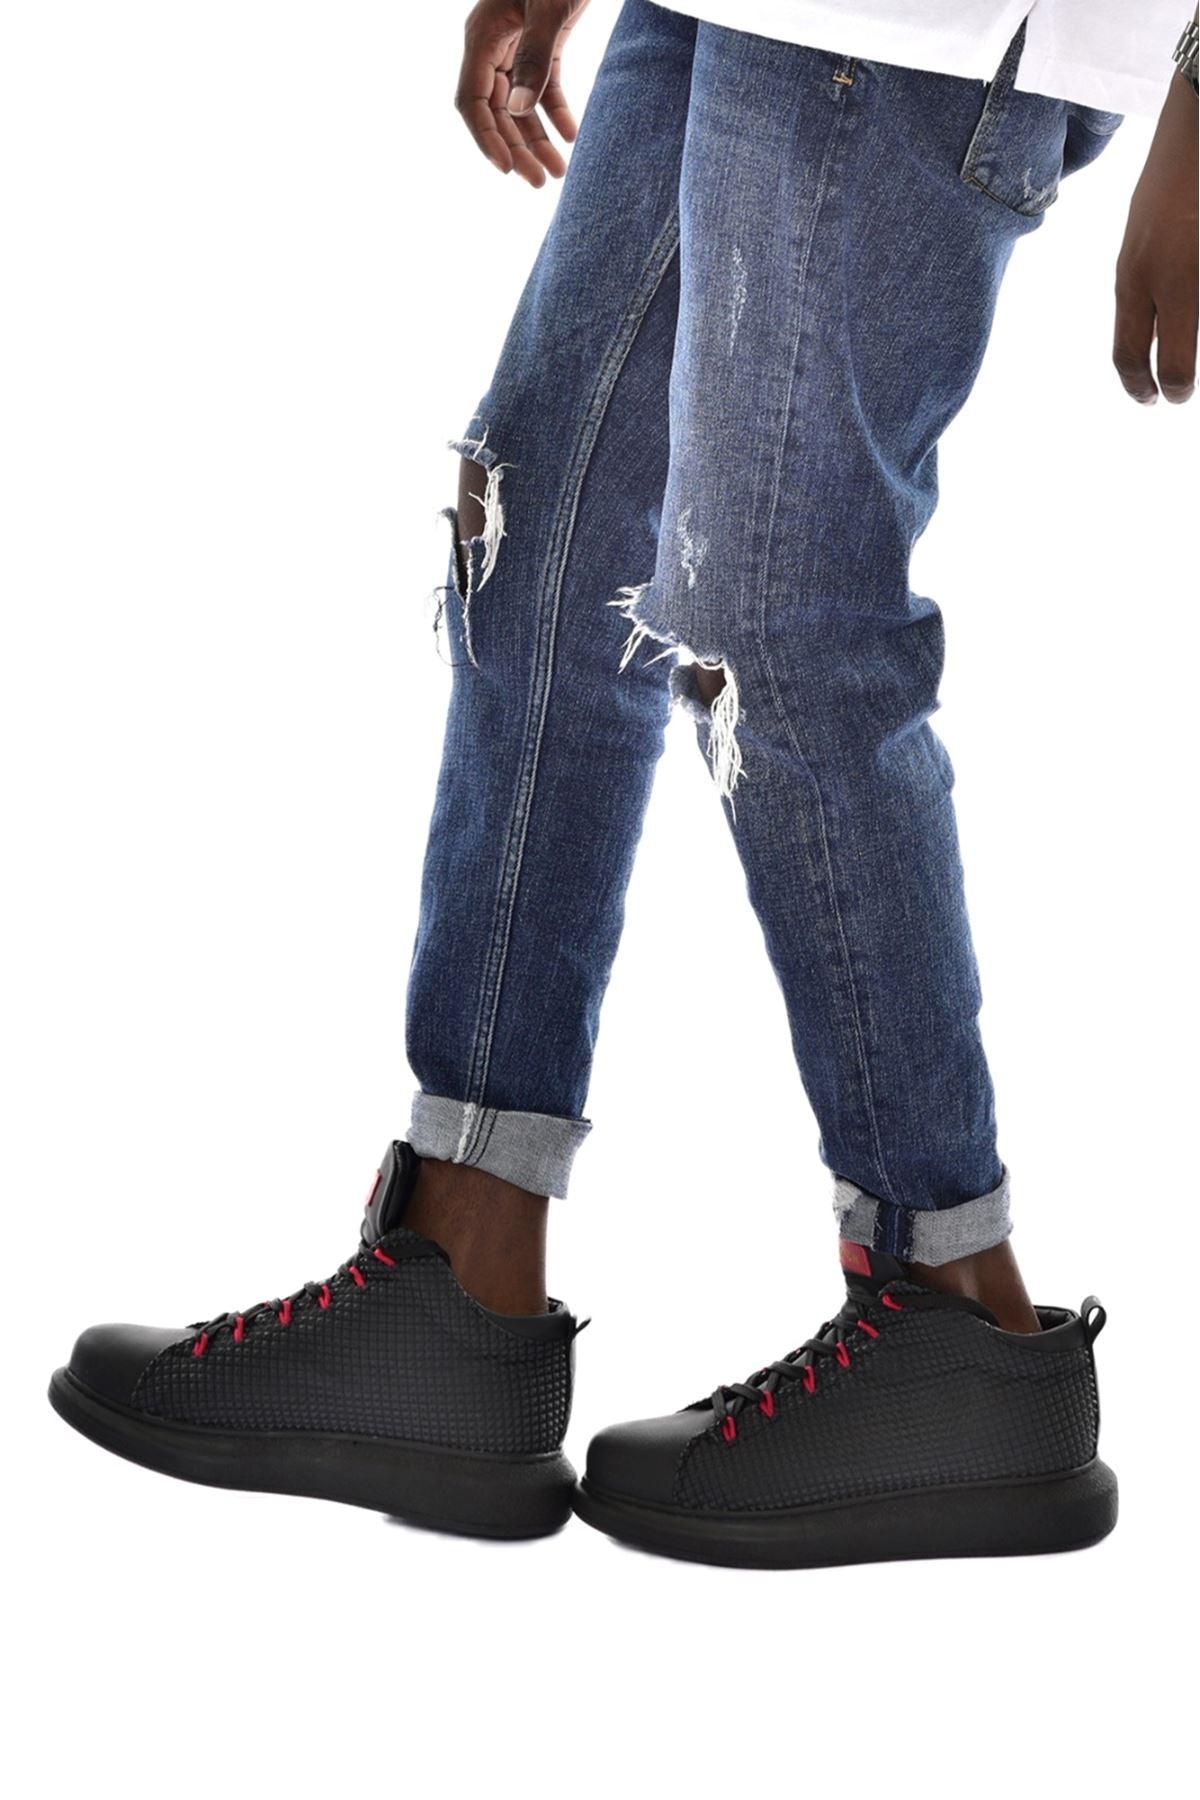 CH111 Garni ST BLACK - YELLOW men's sneakers shoes - STREET MODE ™